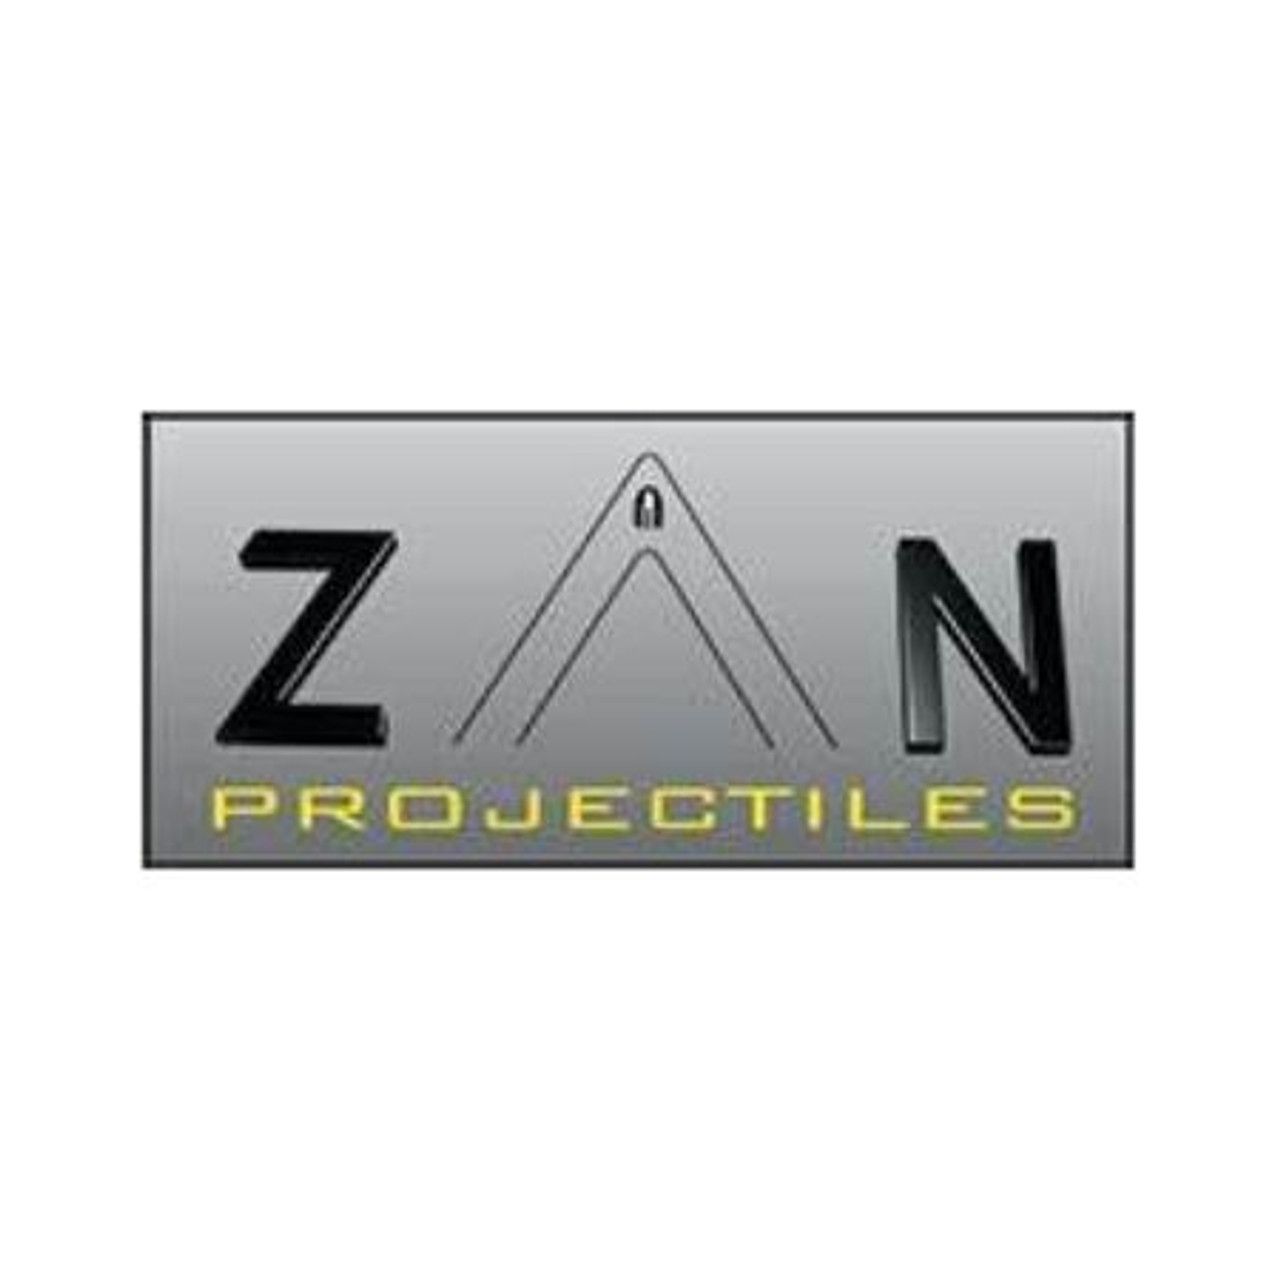 ZAN Projectiles Slugs .250 41gr Hollow Point Pellets for Air Rifles 200pk